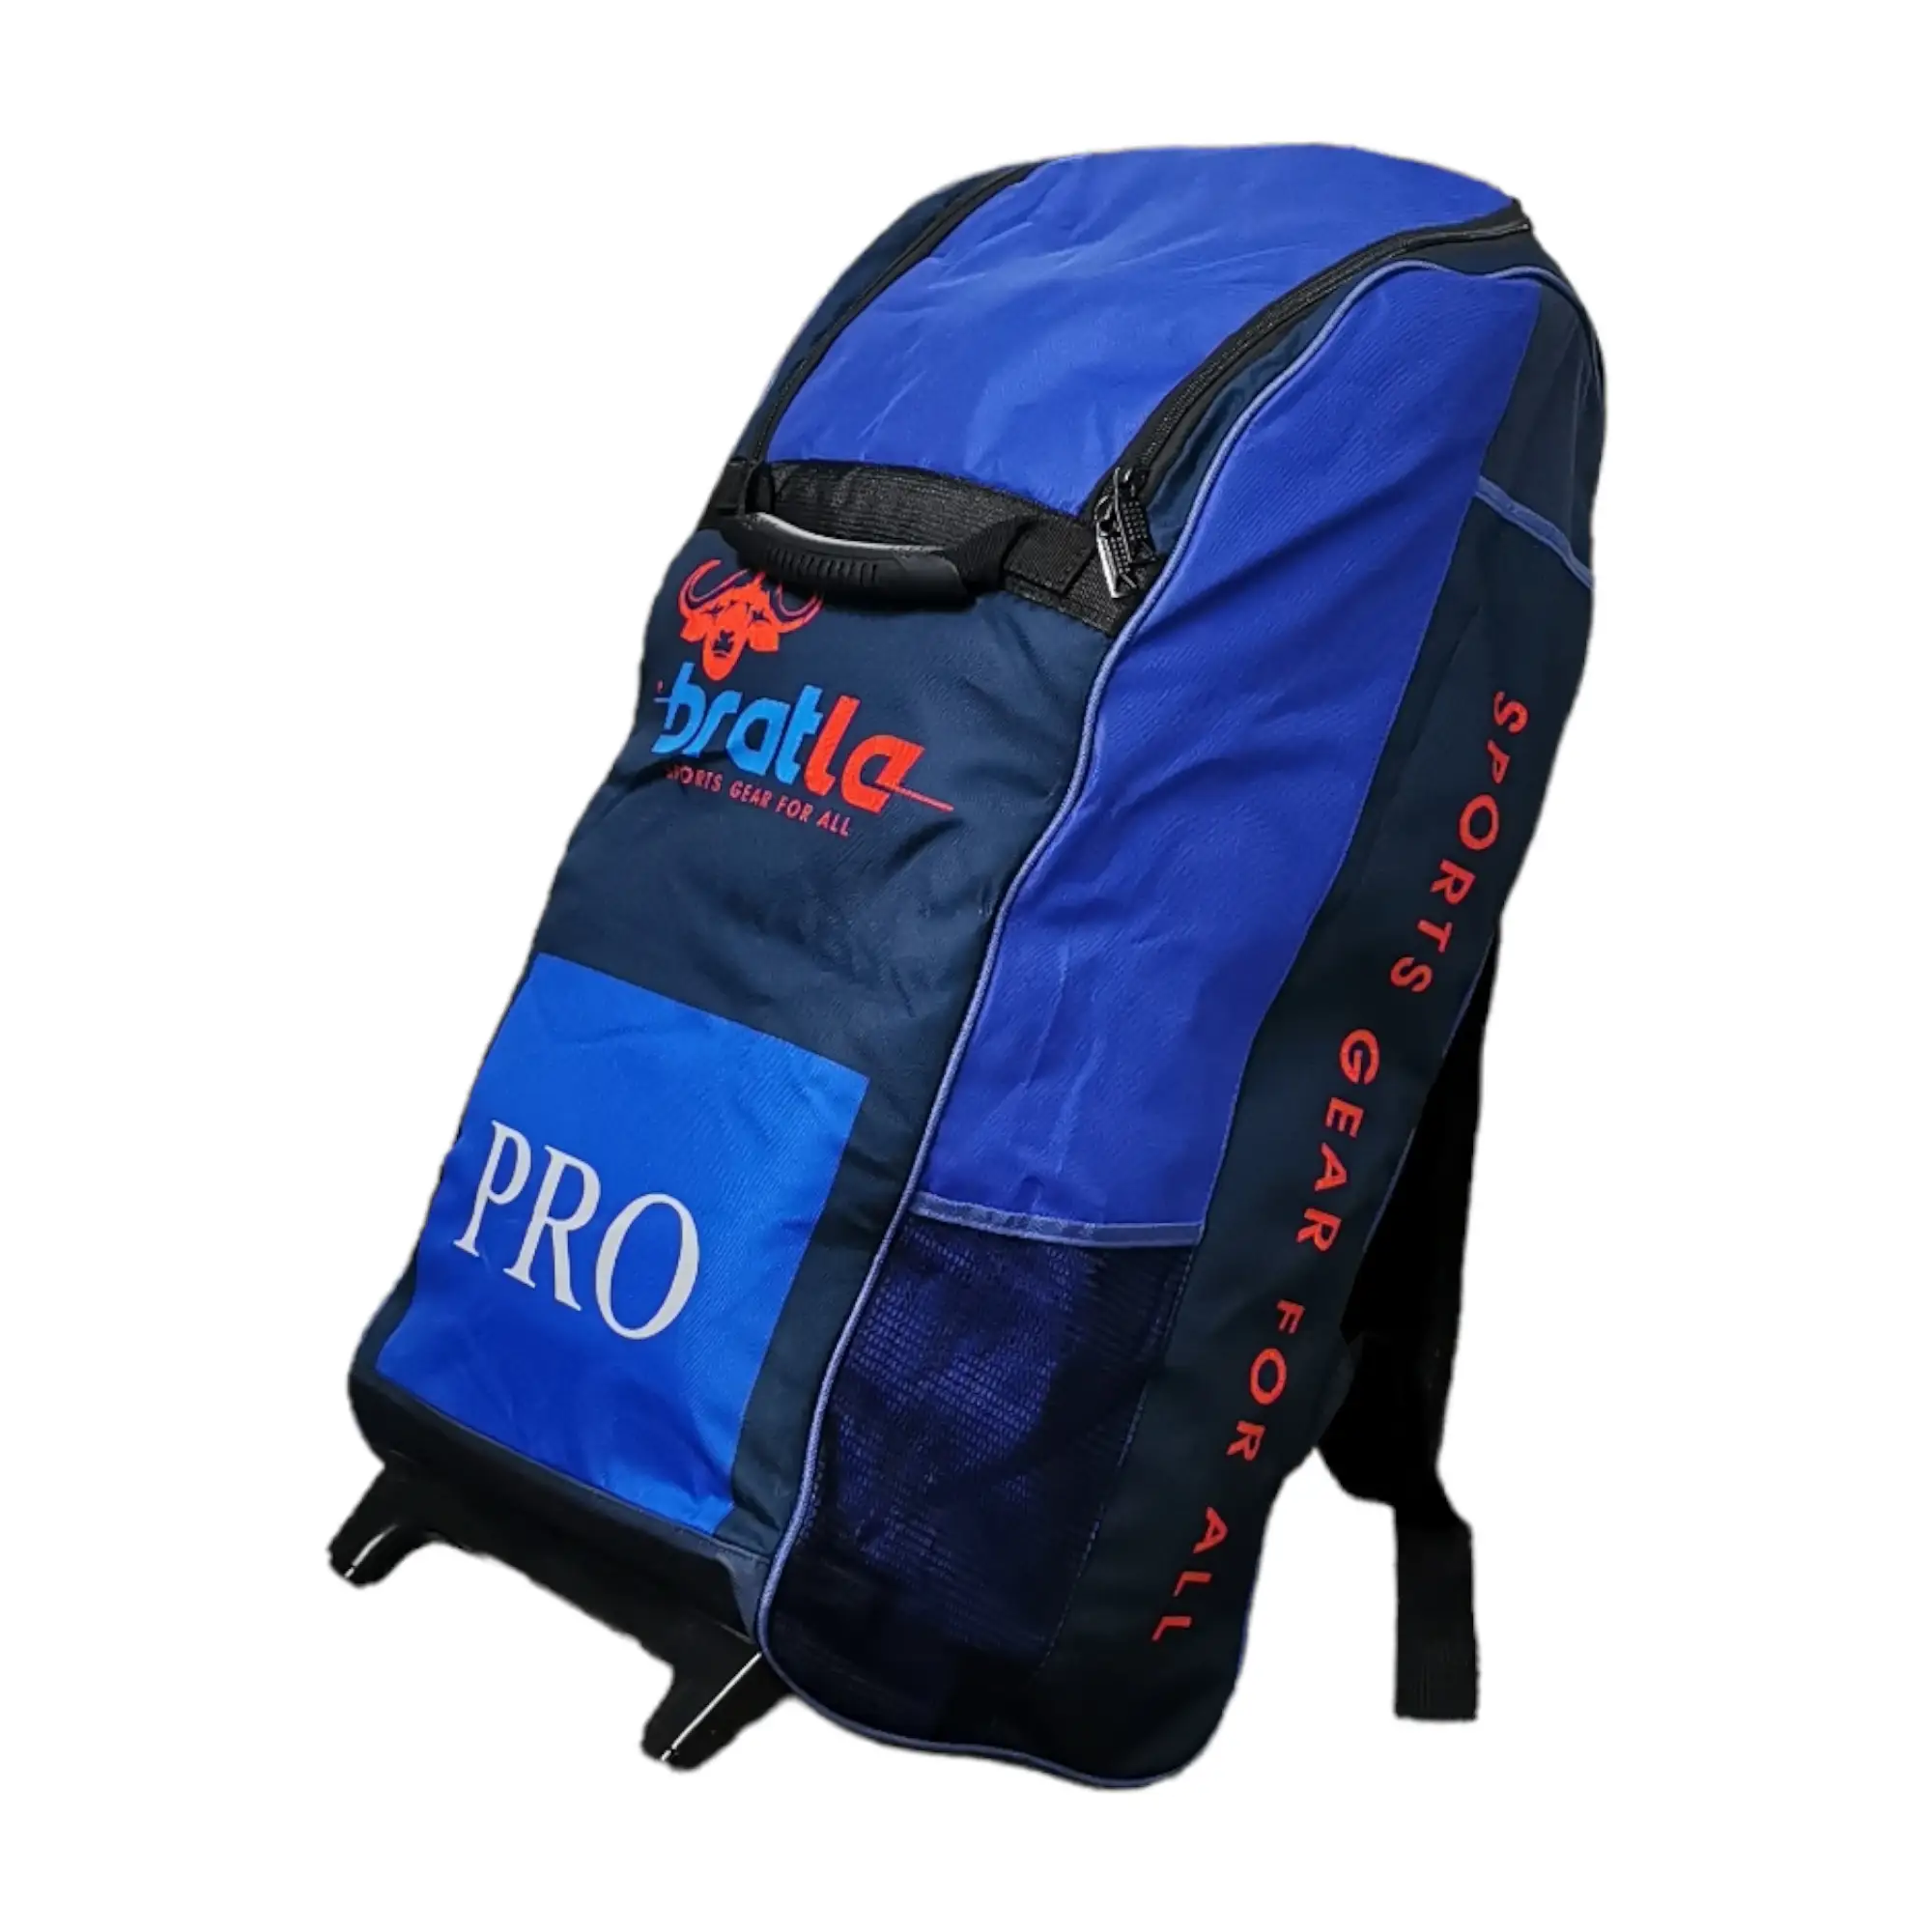 Bratla Pro Cricket Kit Bag Duffle Wheelie for Junior Cricketers Navy/Blue - BAG - PERSONAL